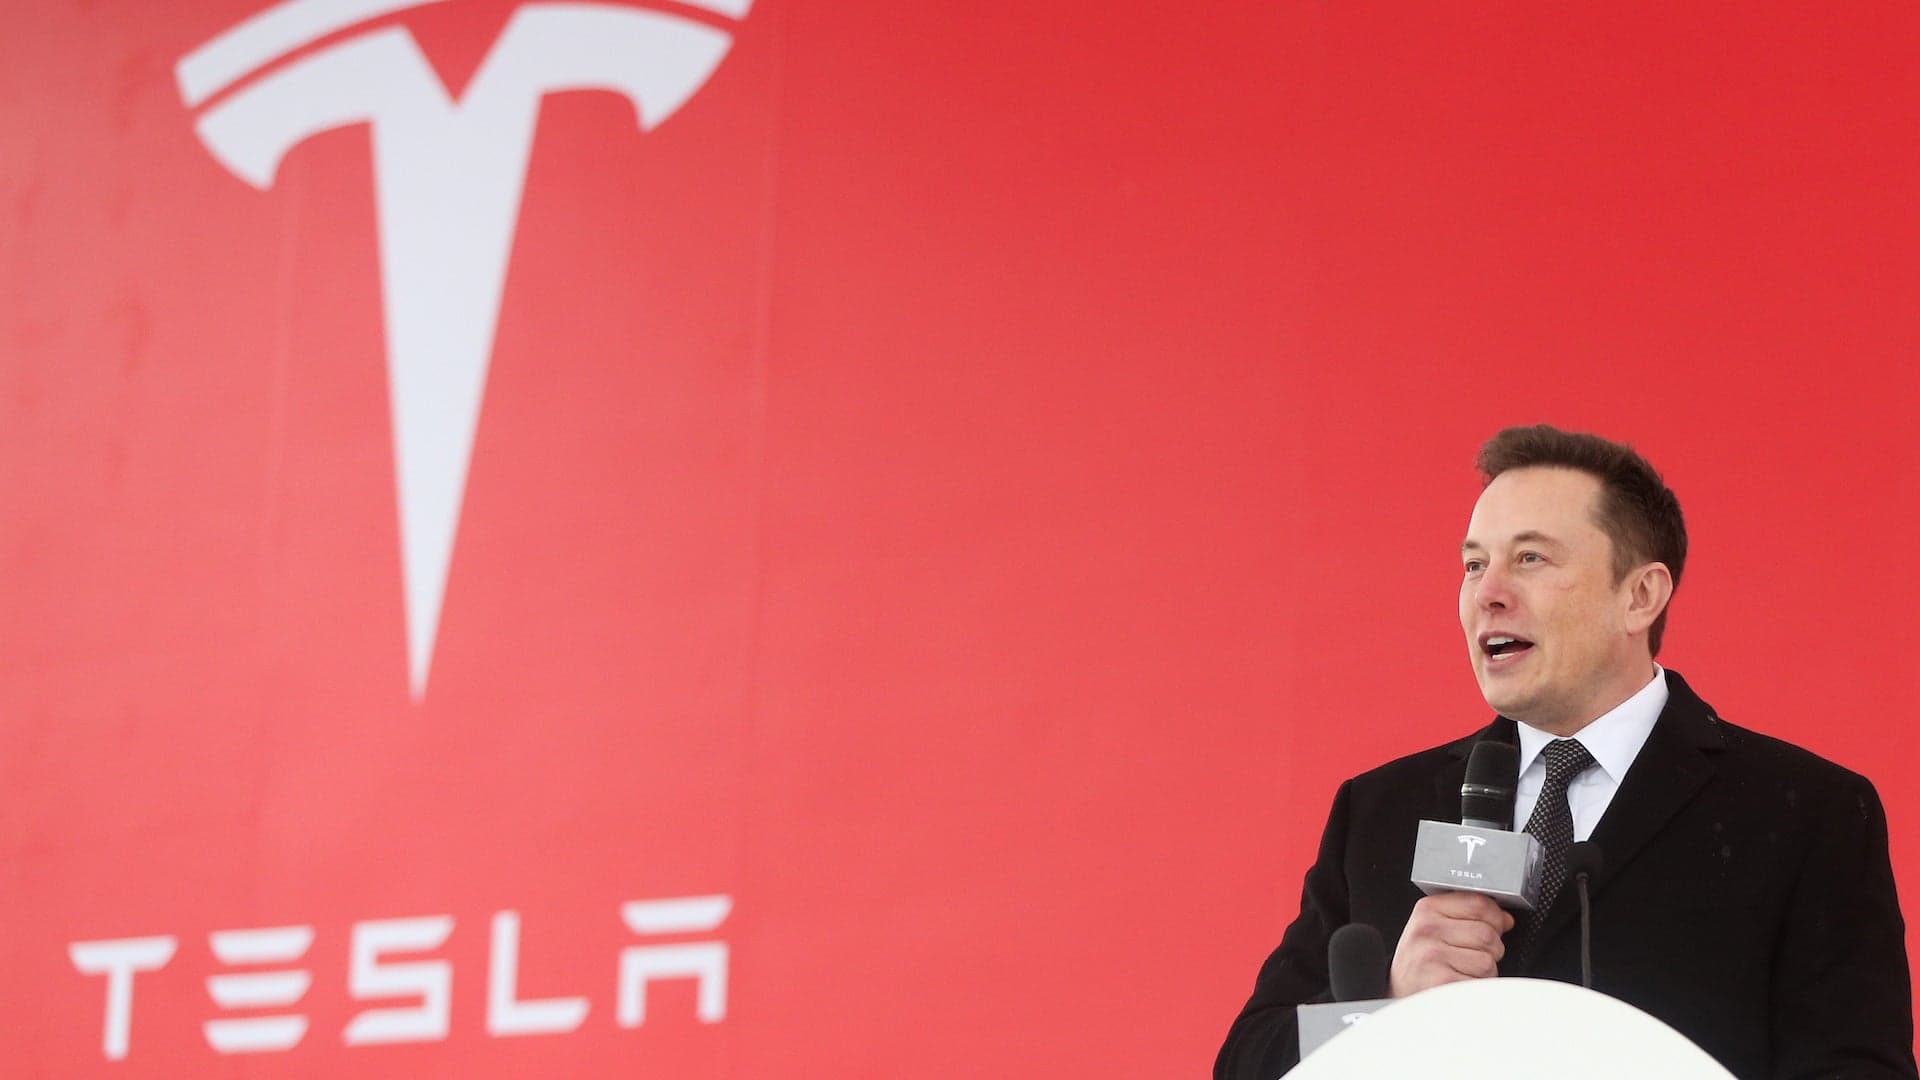 Tesla CFO Deepak Ahuja Leaves Company Following Automaker’s Ambitious Promises